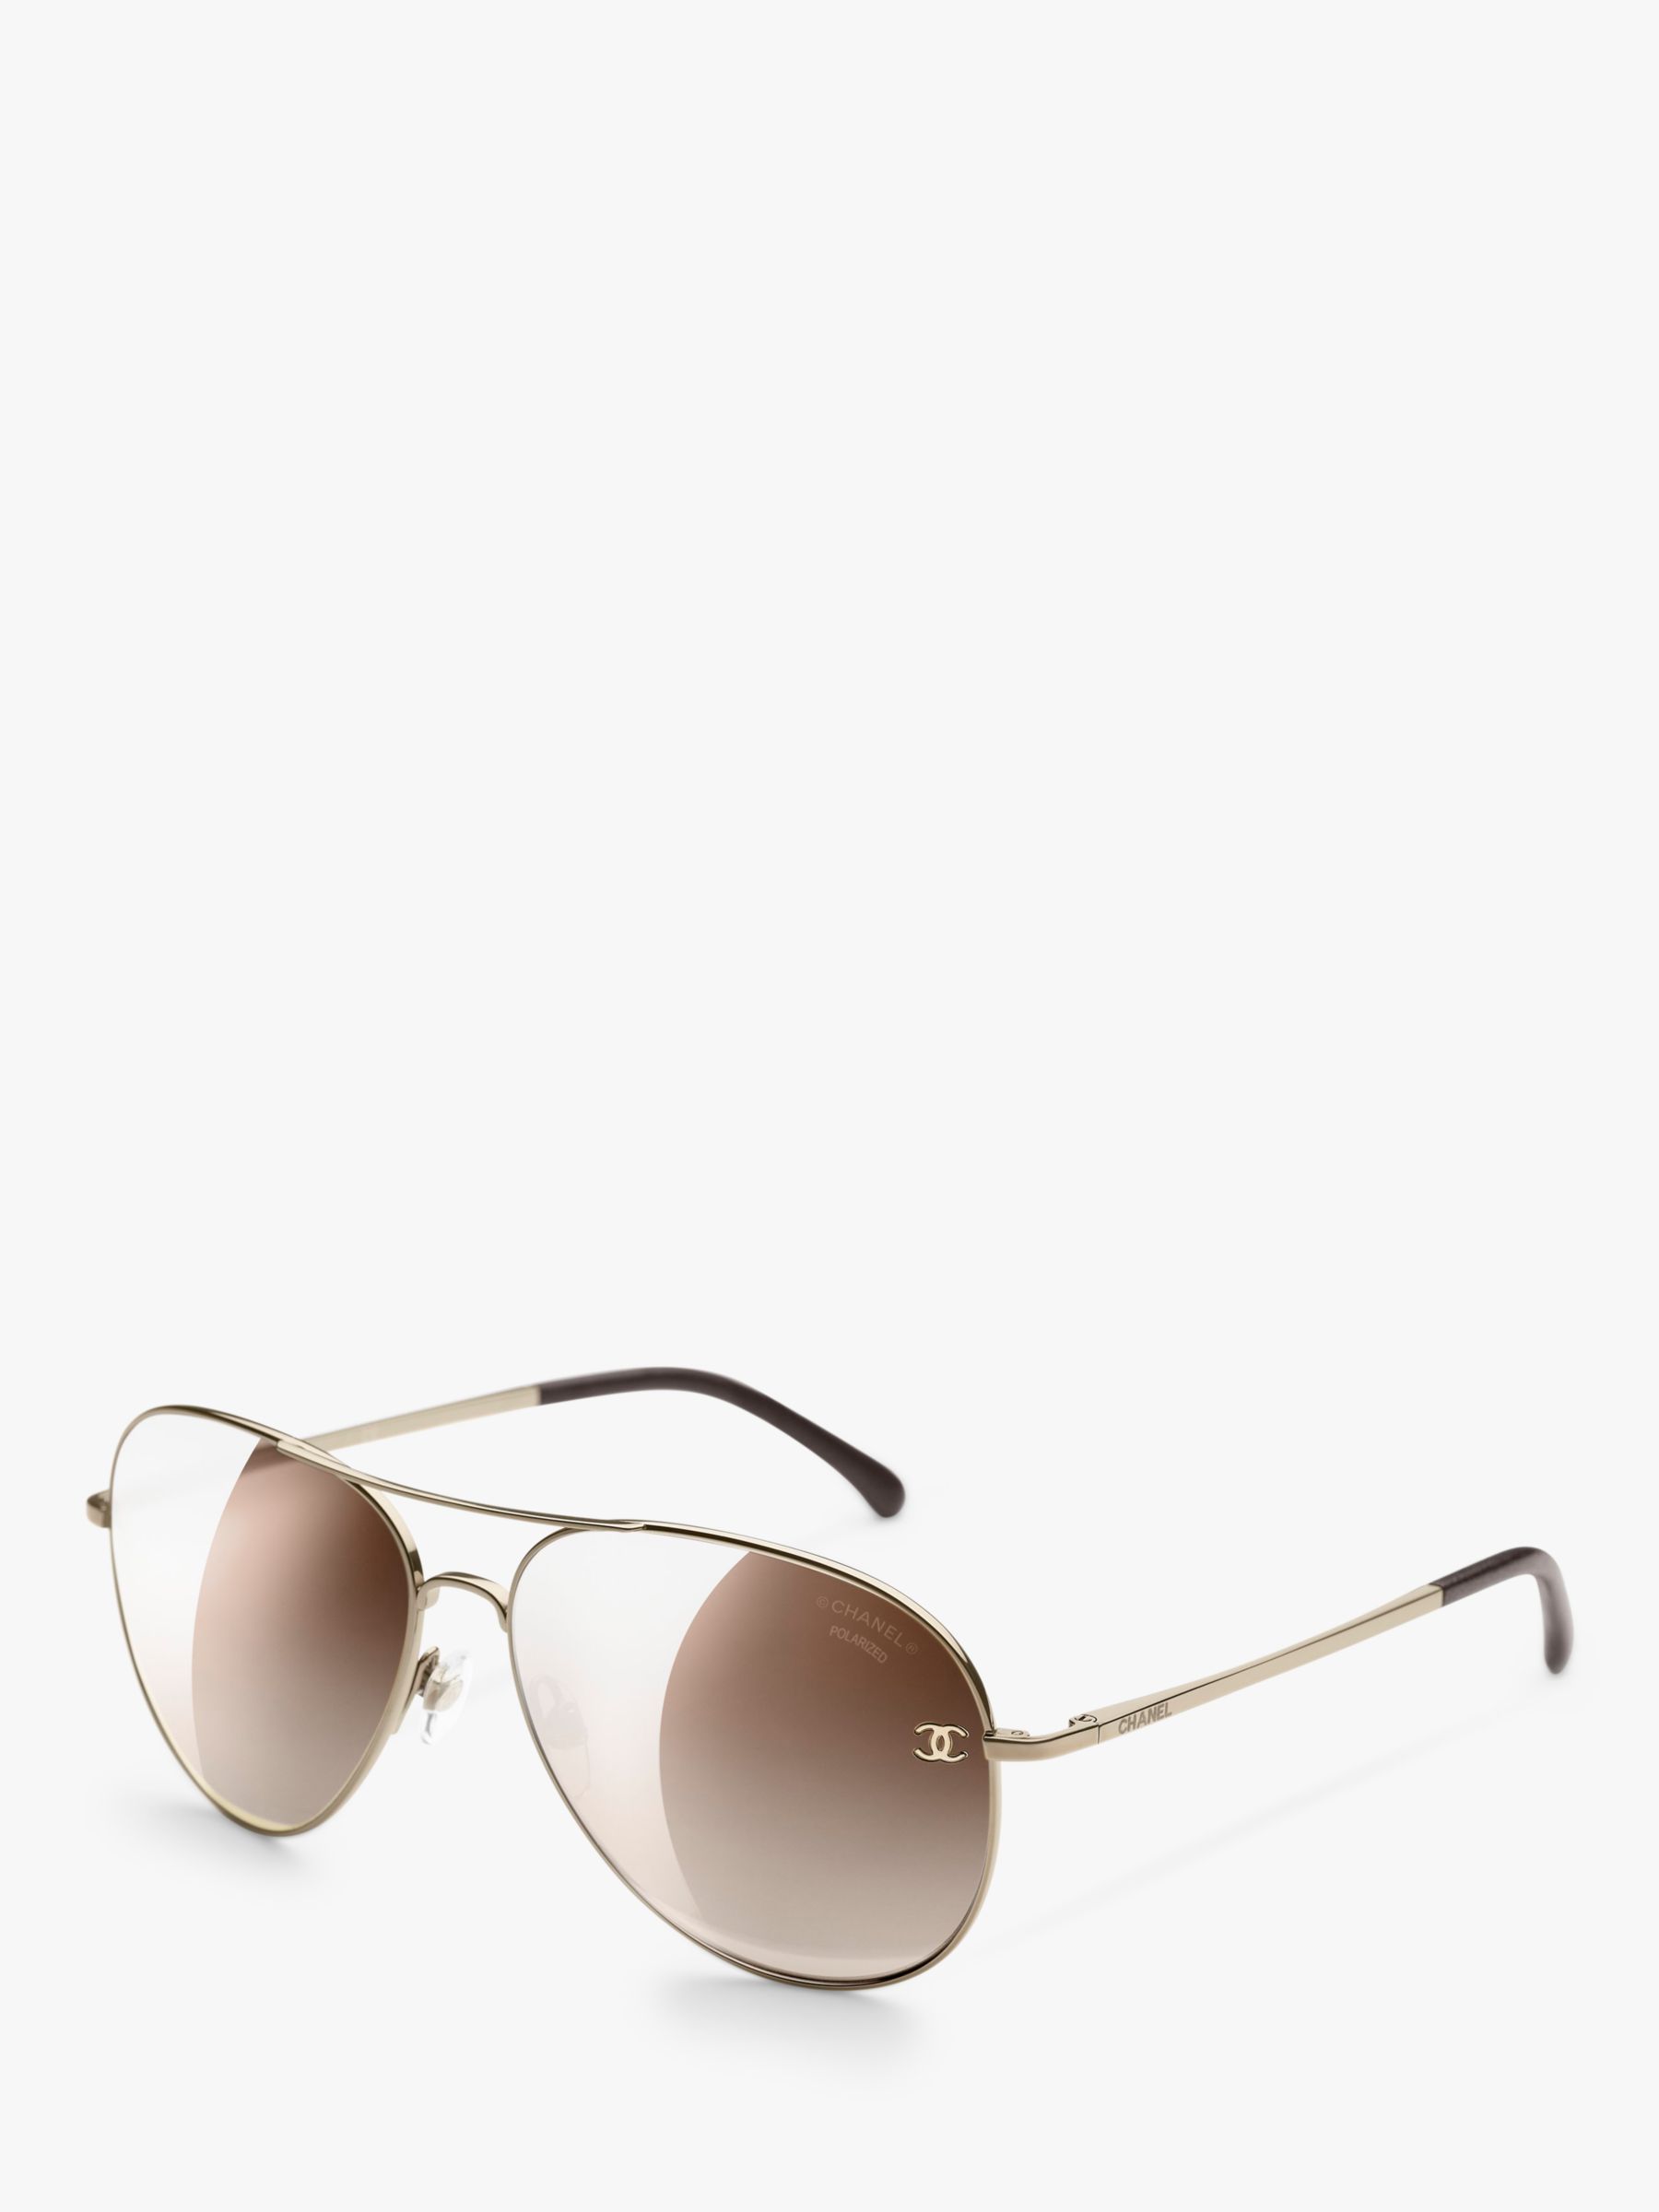 CHANEL CC Aviator Sunglasses 4189-T-Q Pink 175380